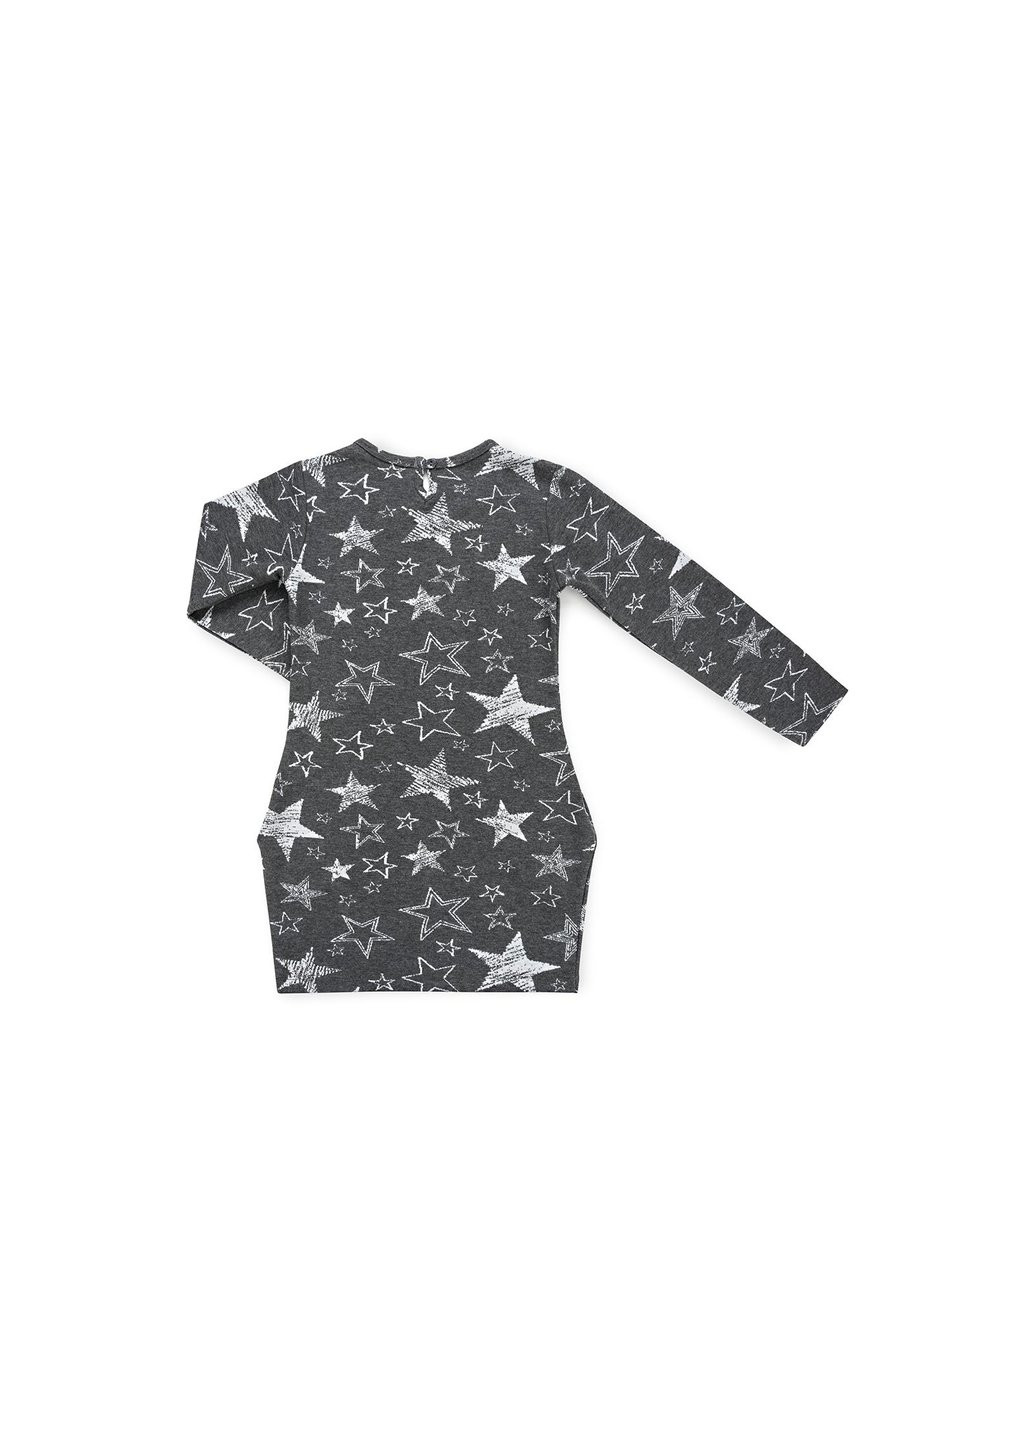 Сіра сукня із зірочками (11580-152g-gray) Breeze (257141340)